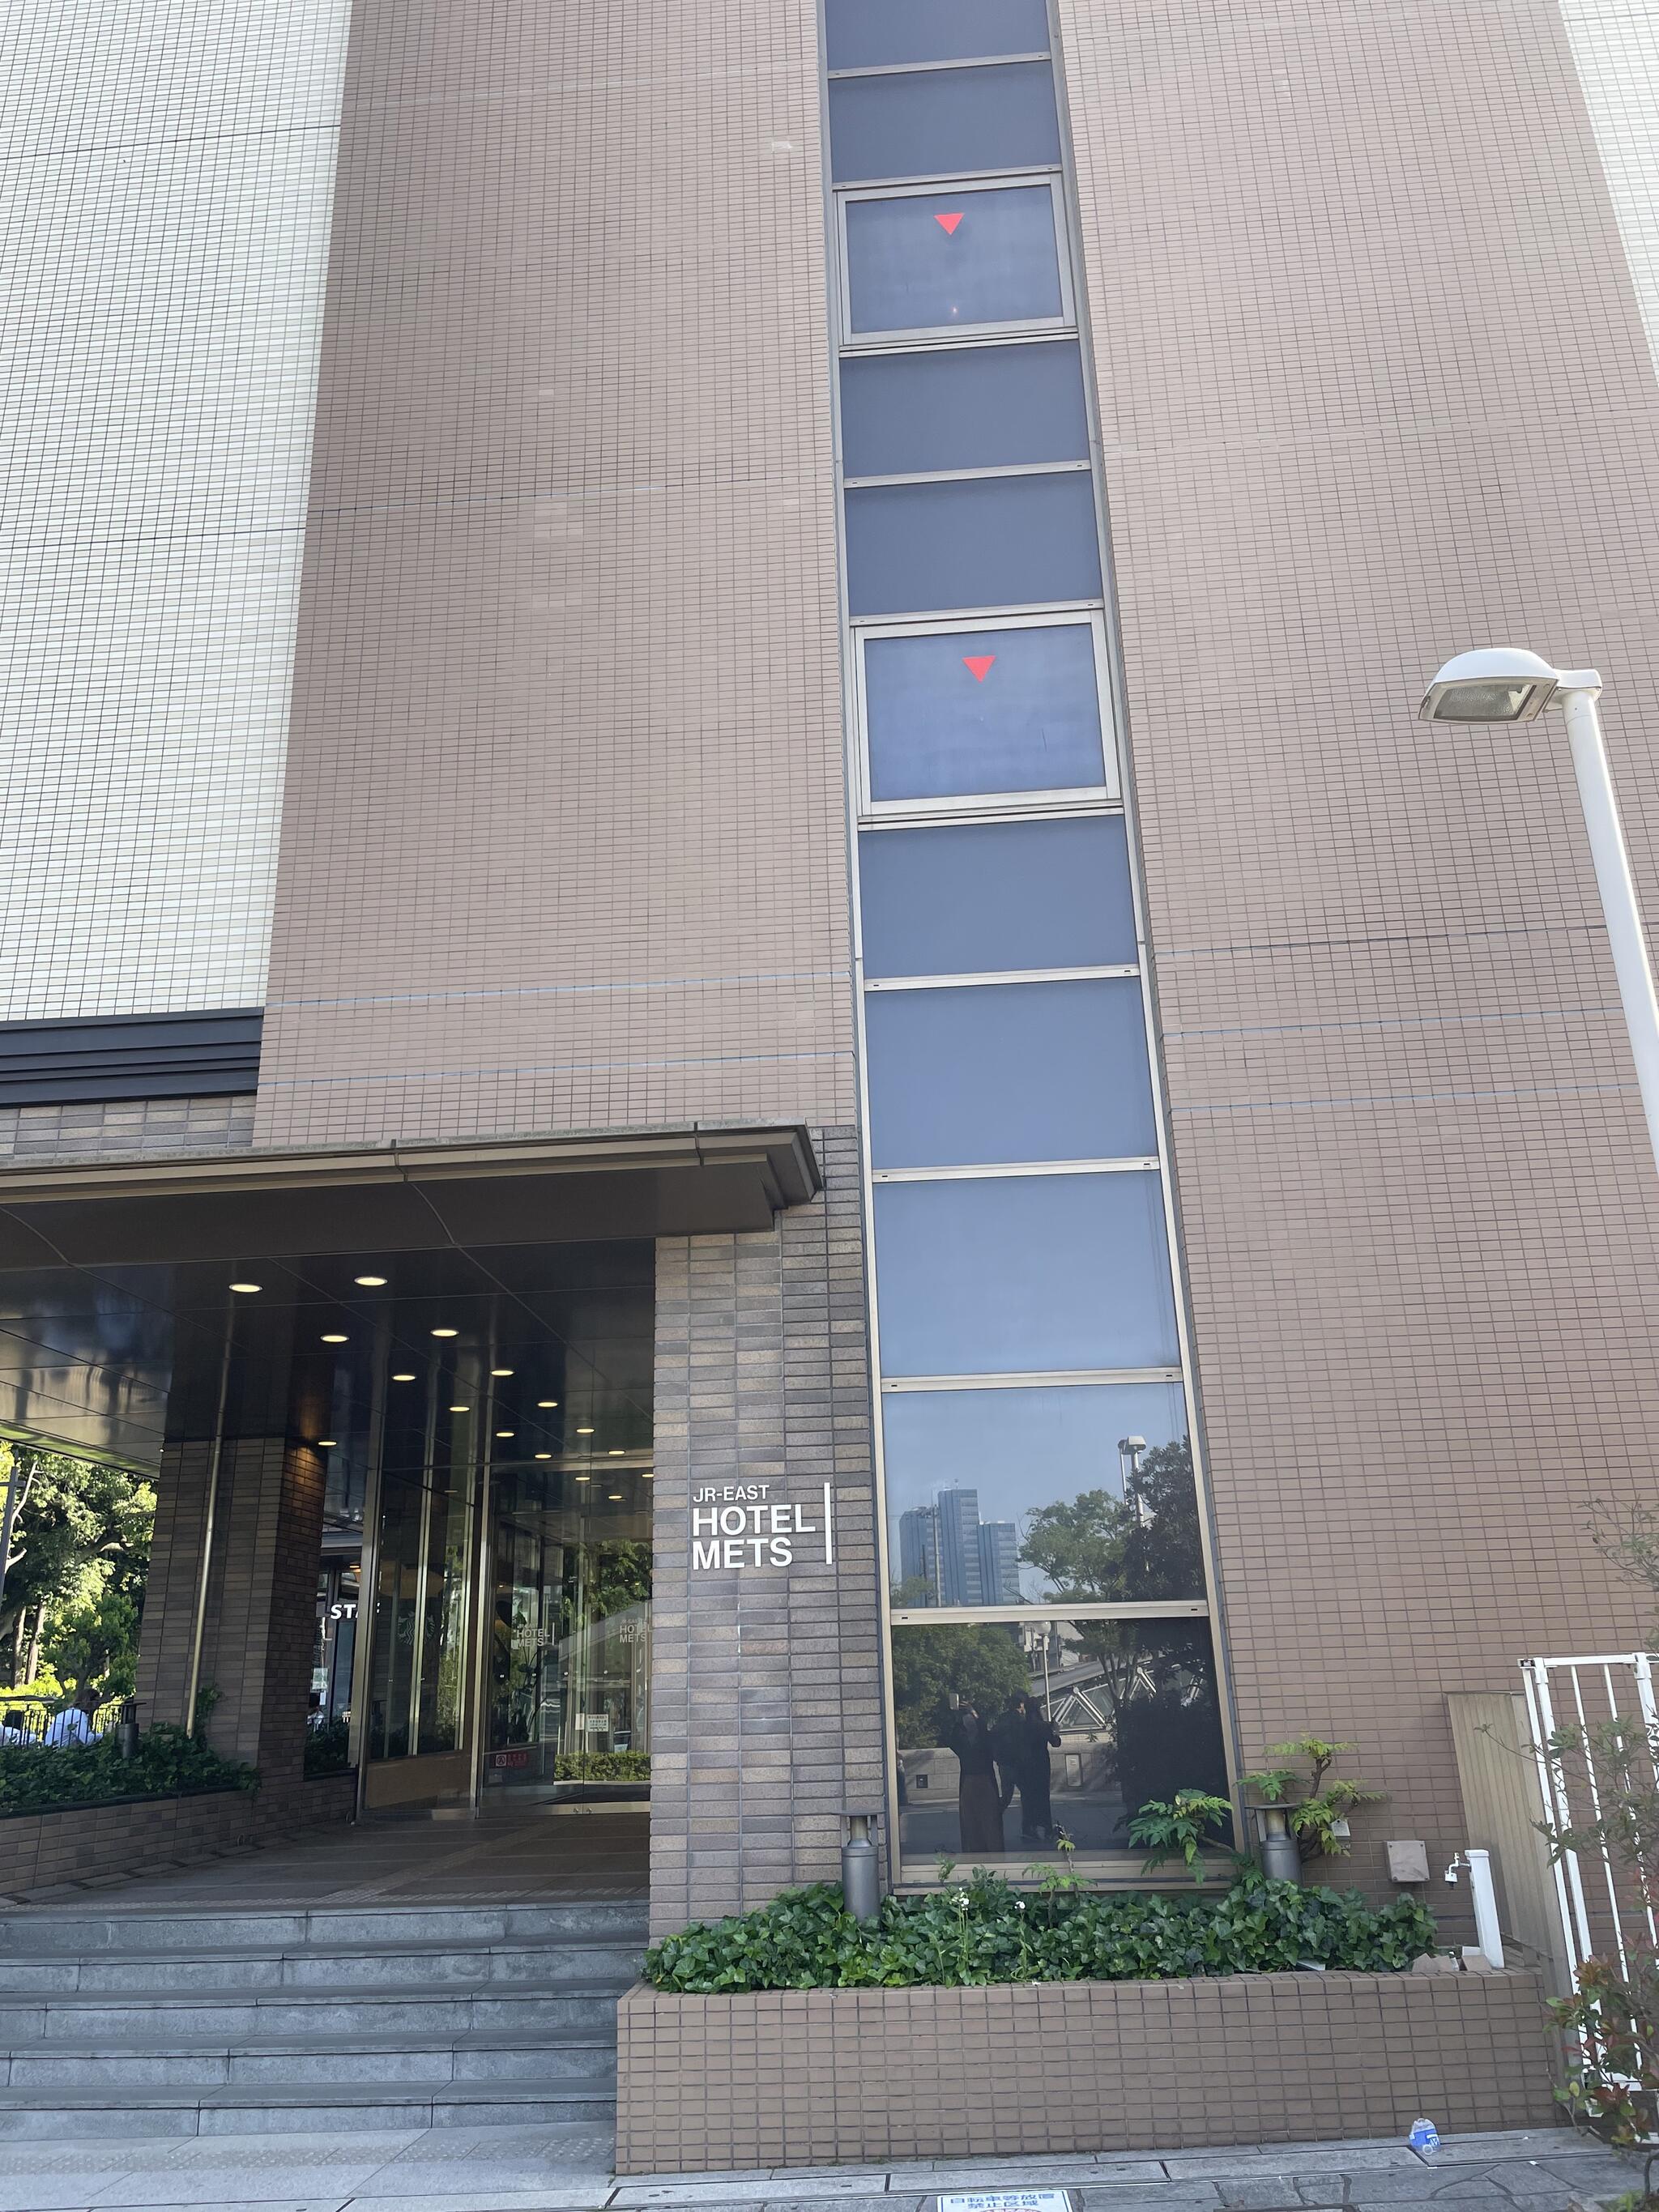 JR東日本ホテルメッツ 目白の代表写真6